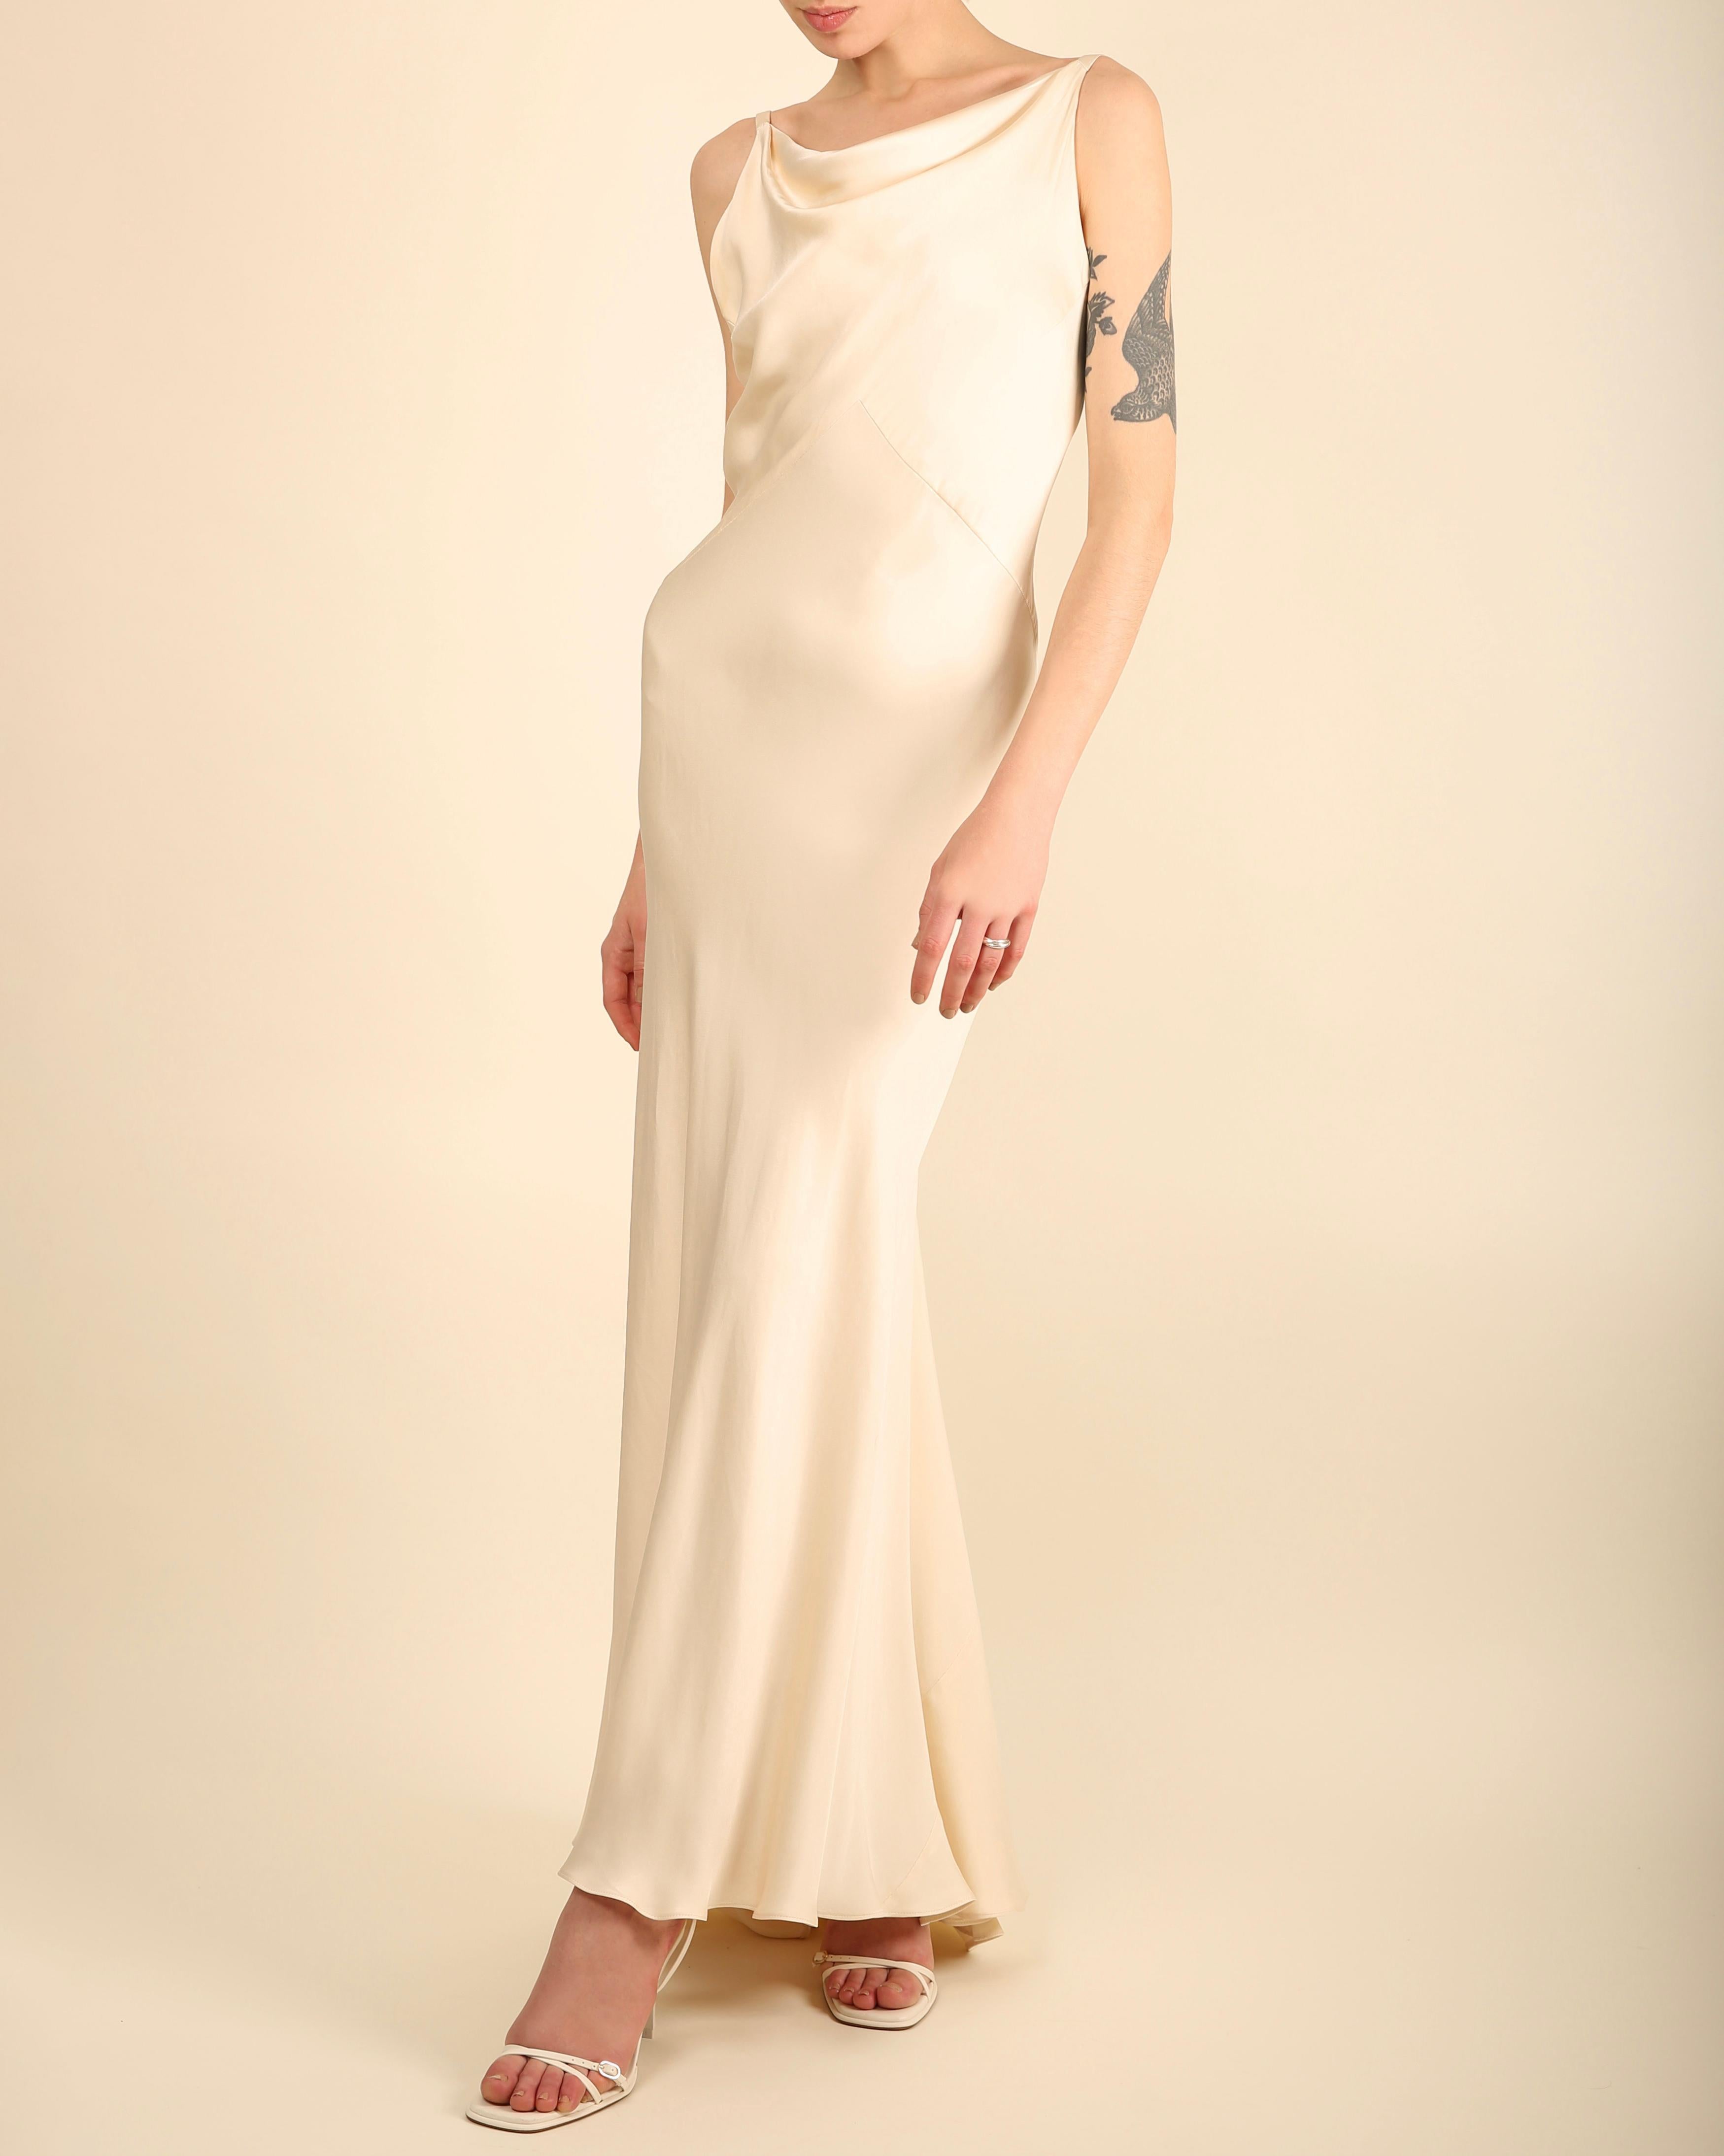 Women's or Men's Ralph Lauren champagne bias cut backless silk slip style backless gown dress